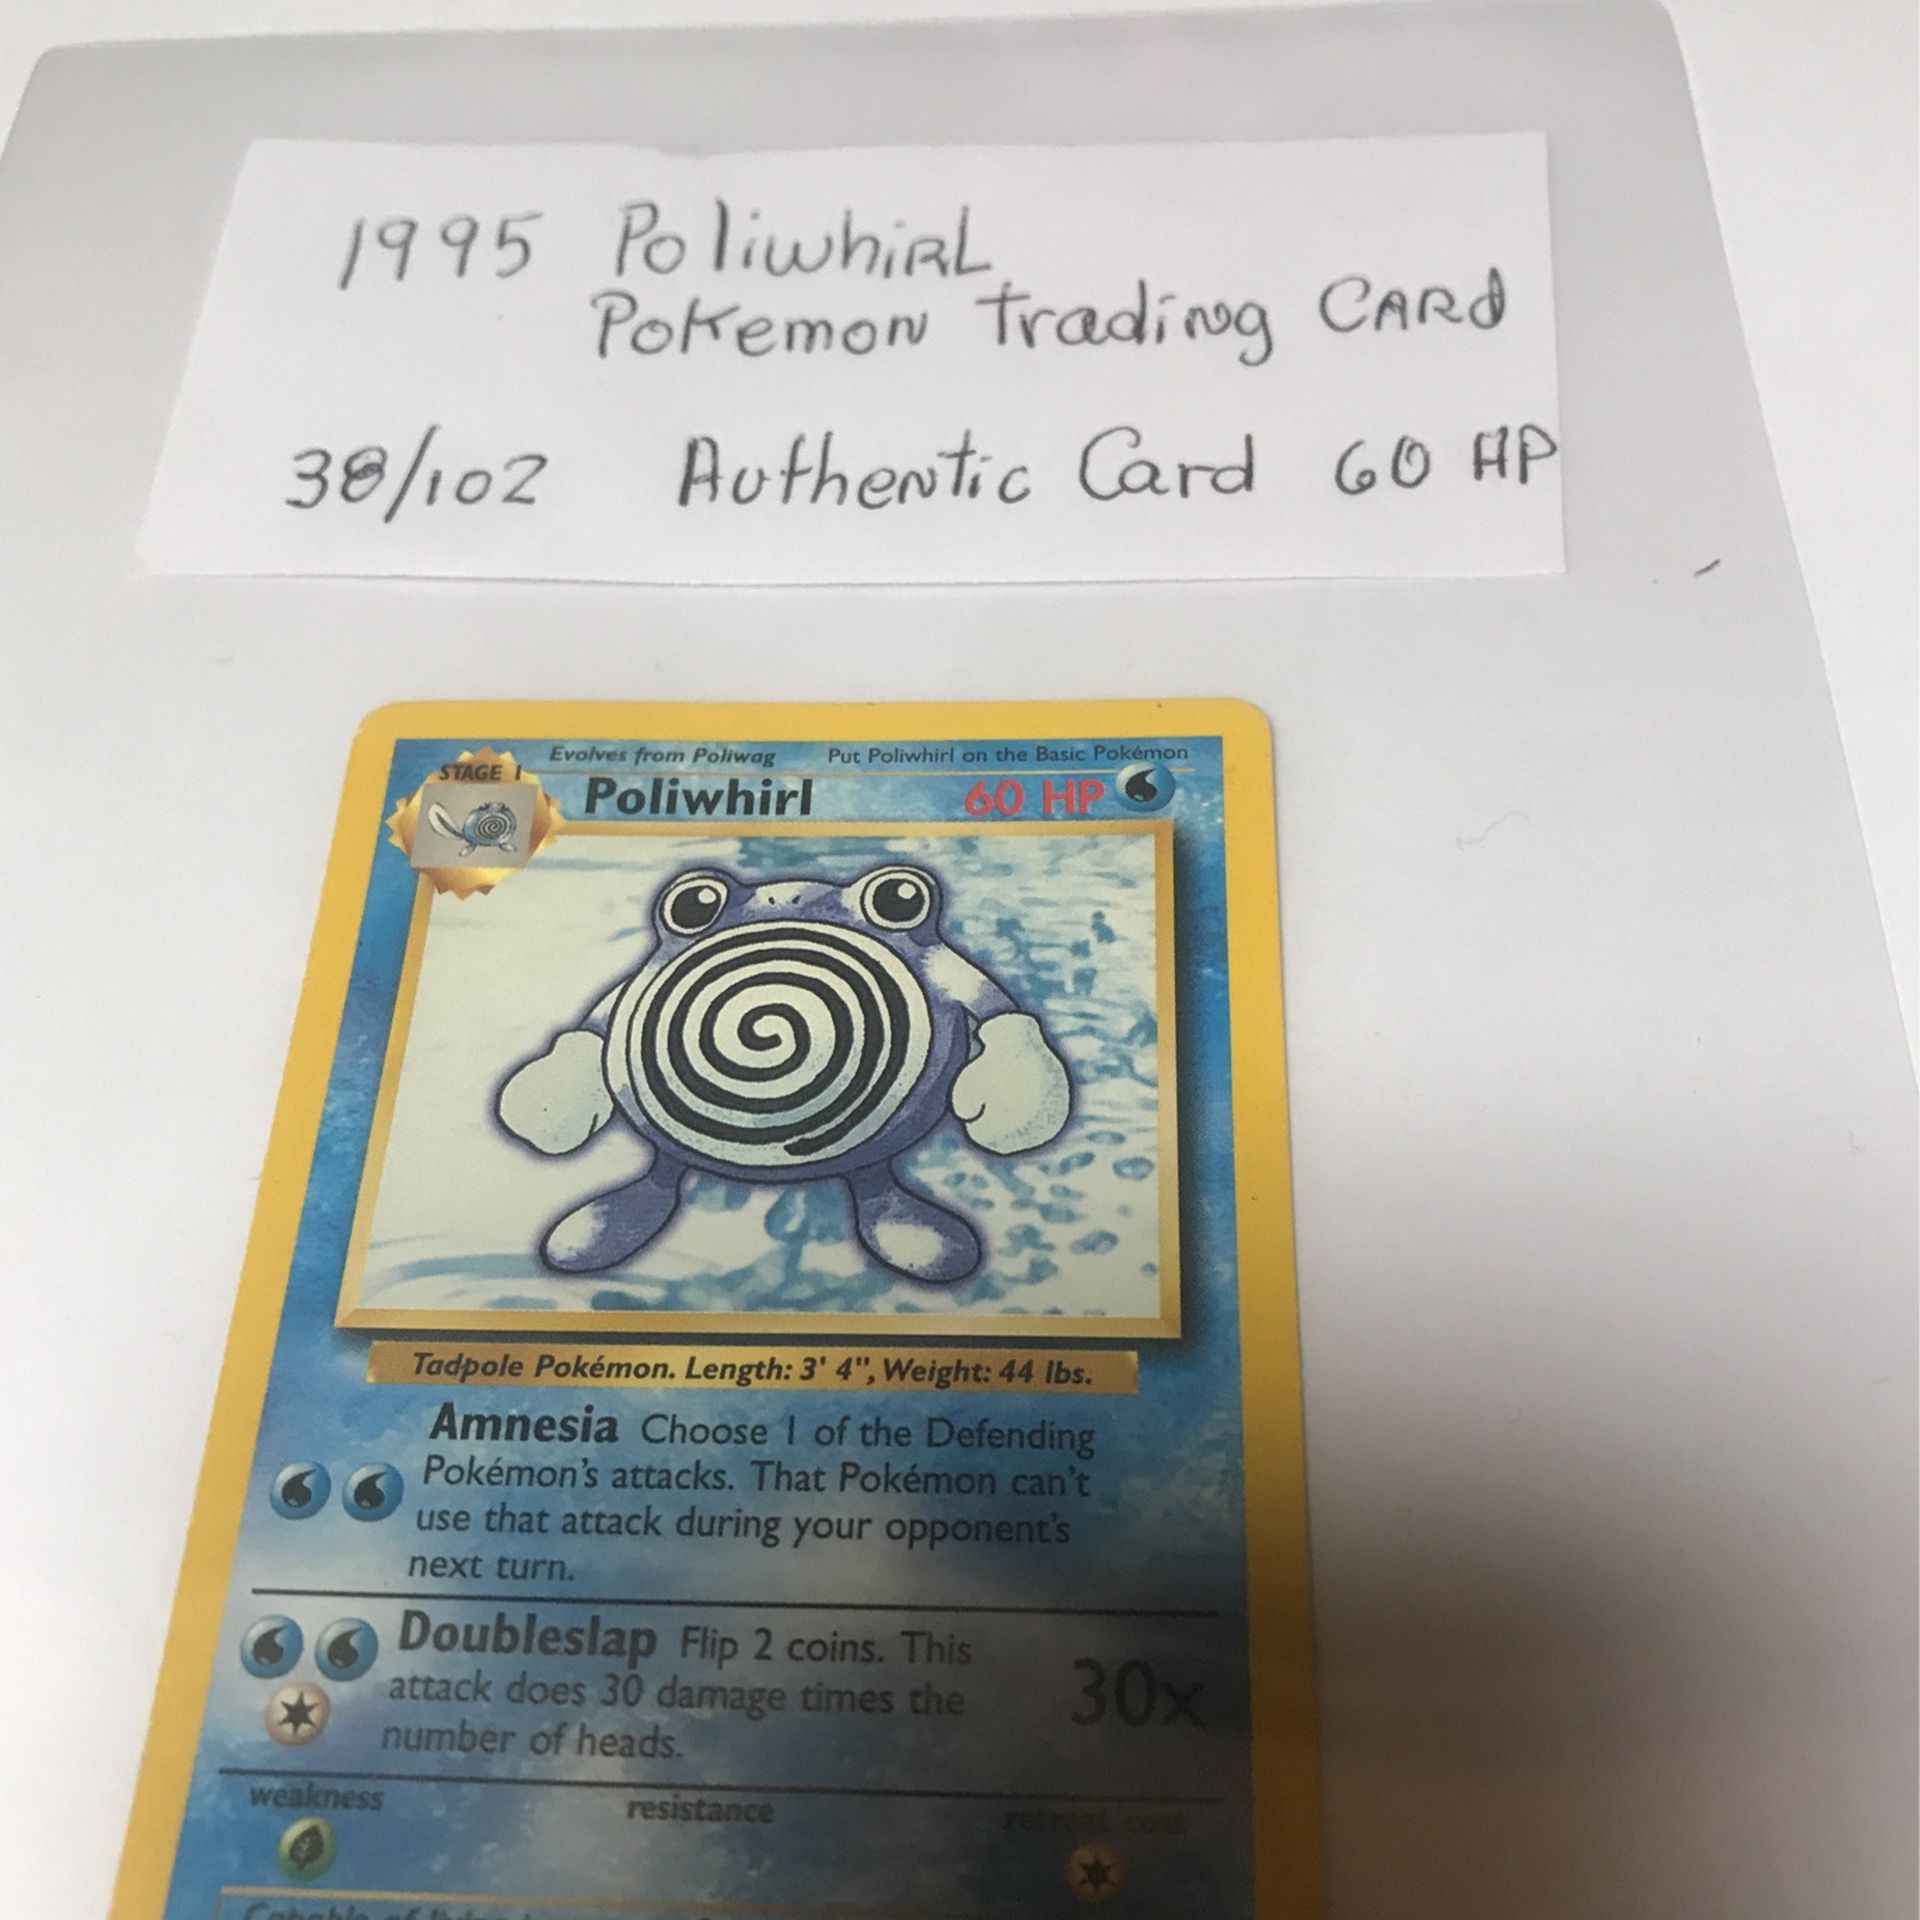 1995 Poliwhirl Pokemon Trading Card 38/102